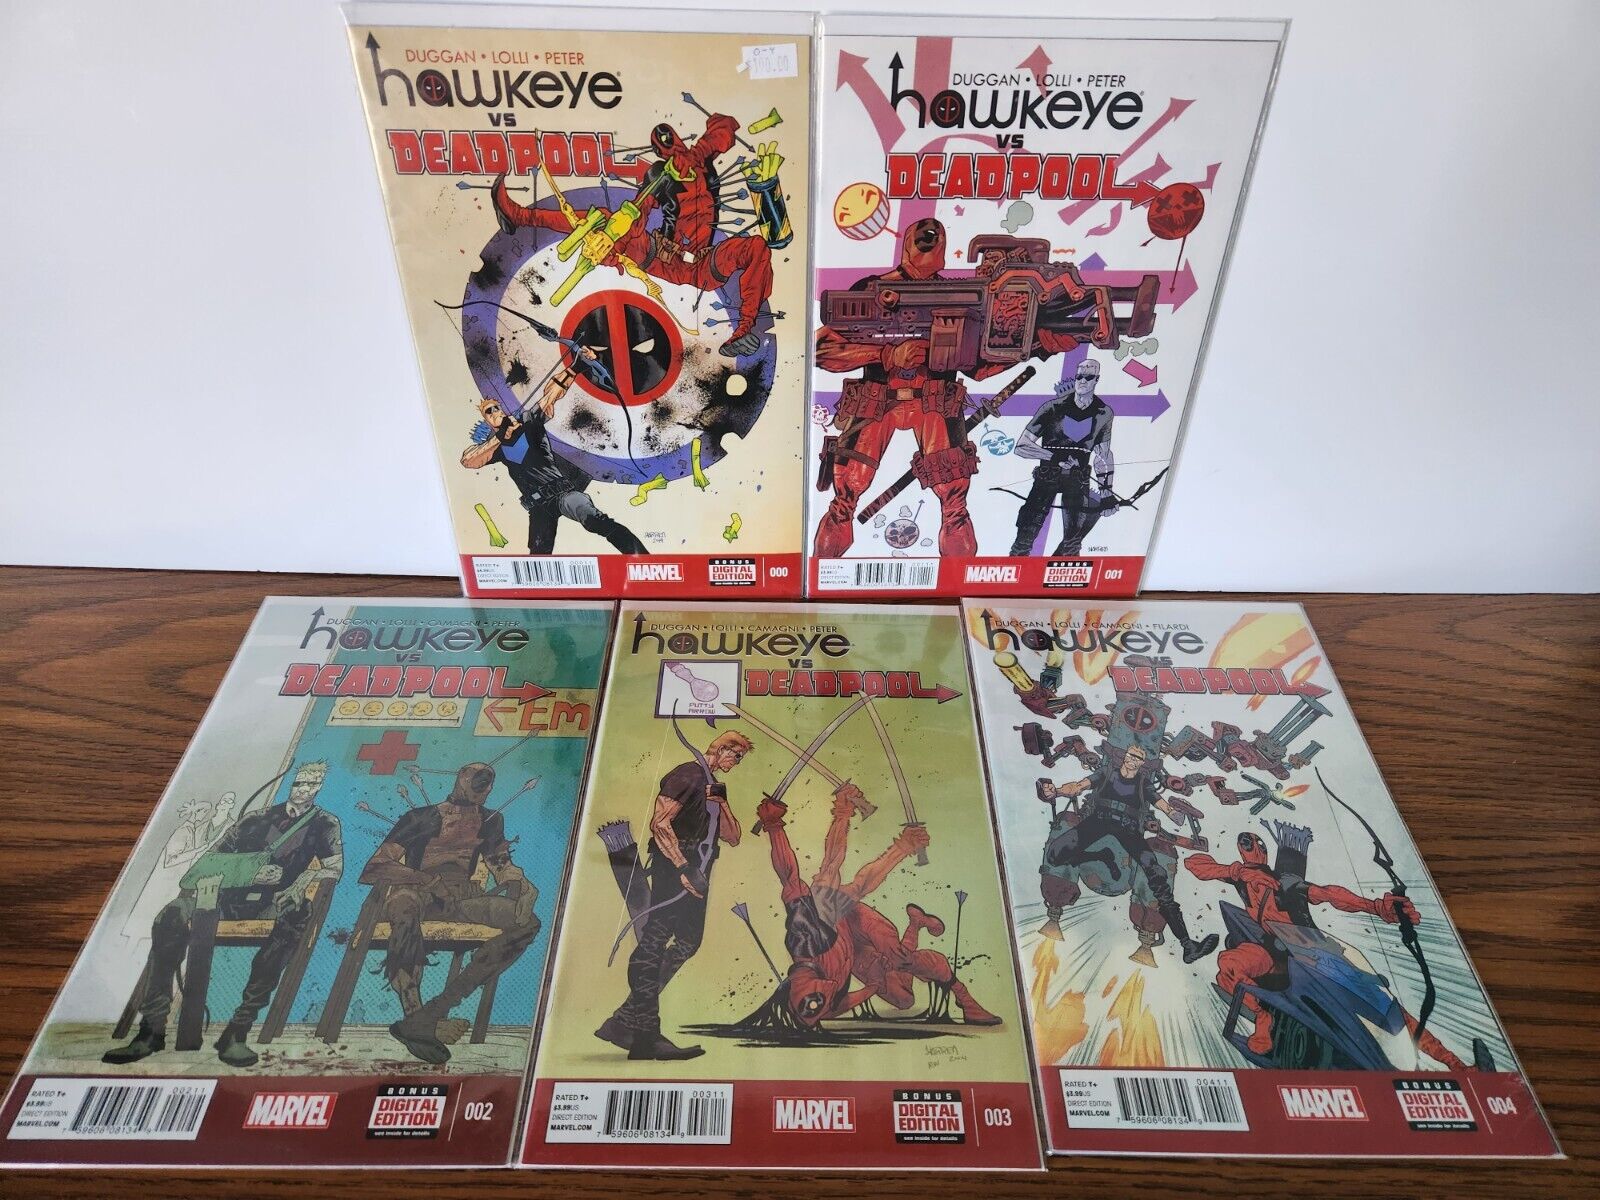 Hawkeye vs Deadpool #0 1 2 3 4 set Marvel Comic 1st Print 2014 NM spider gwen